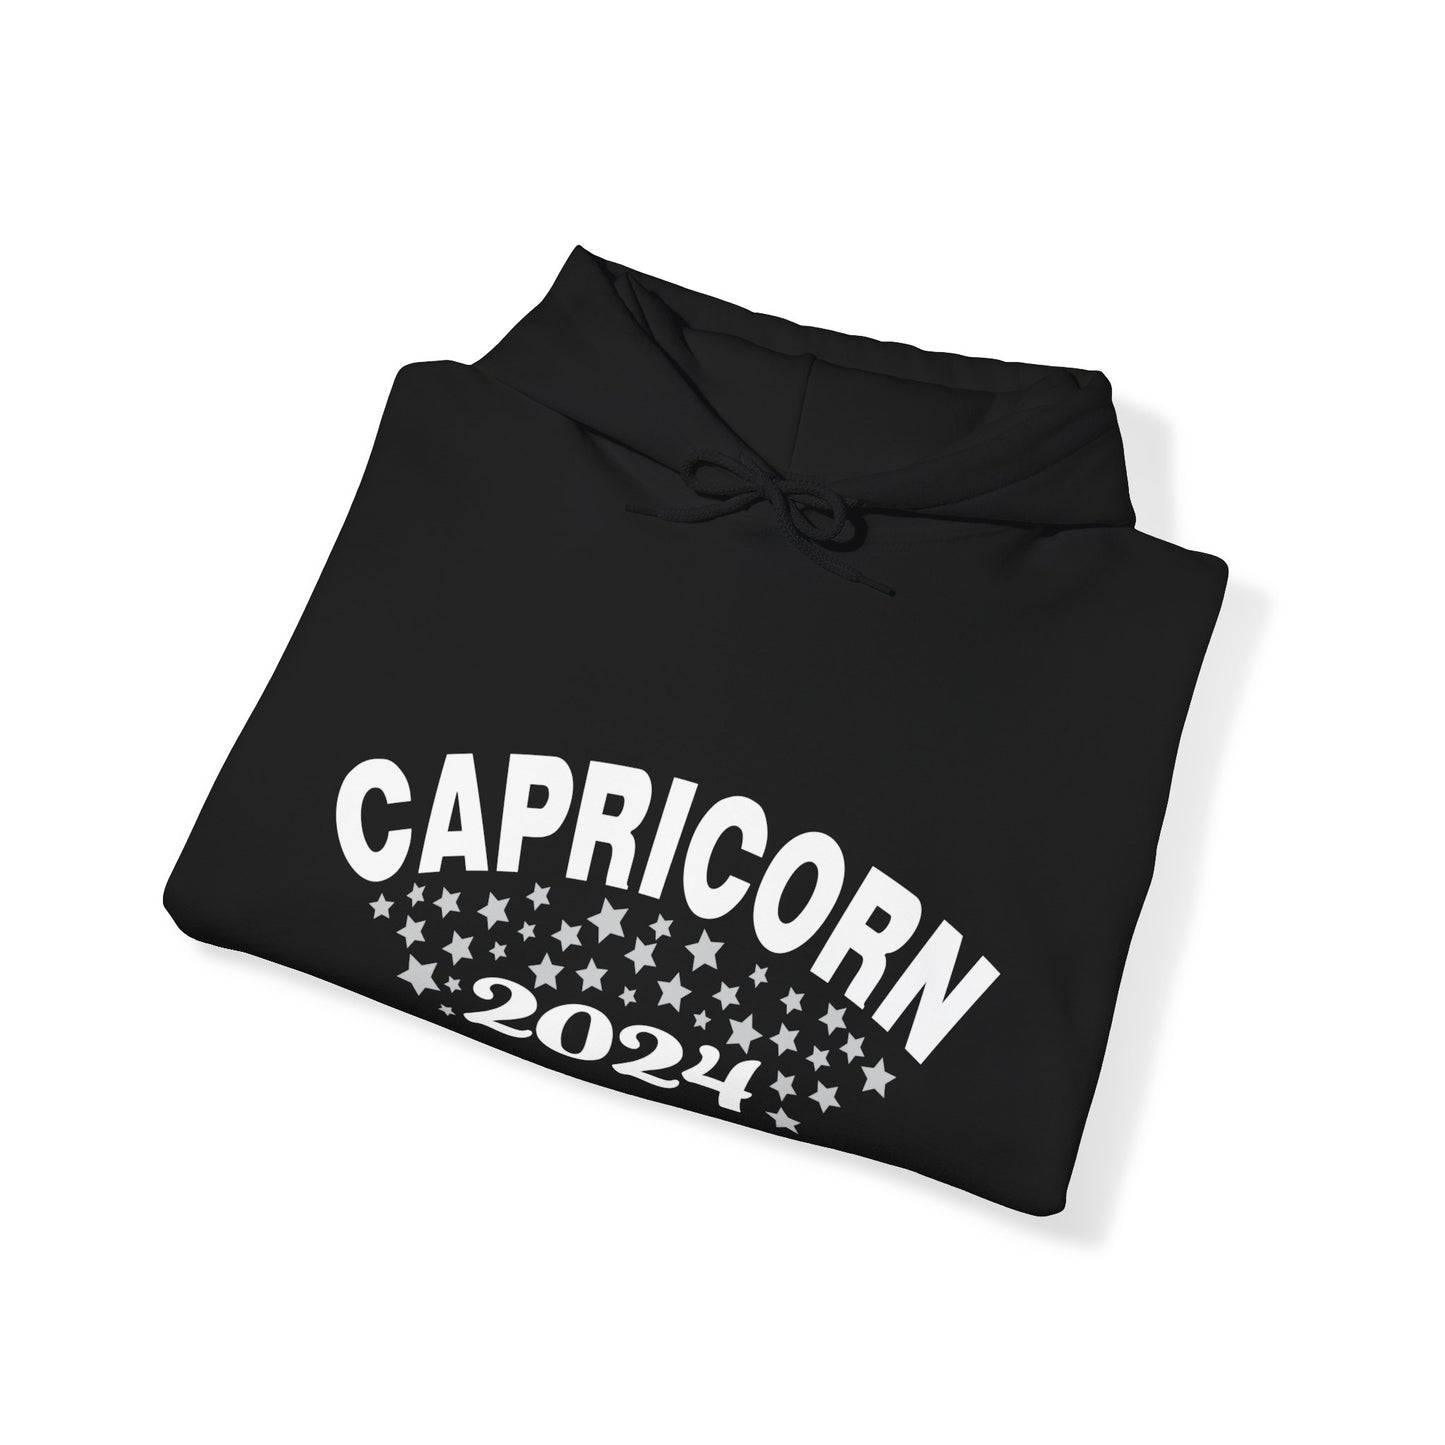 Capricorn Hooded Sweatshirt 2024